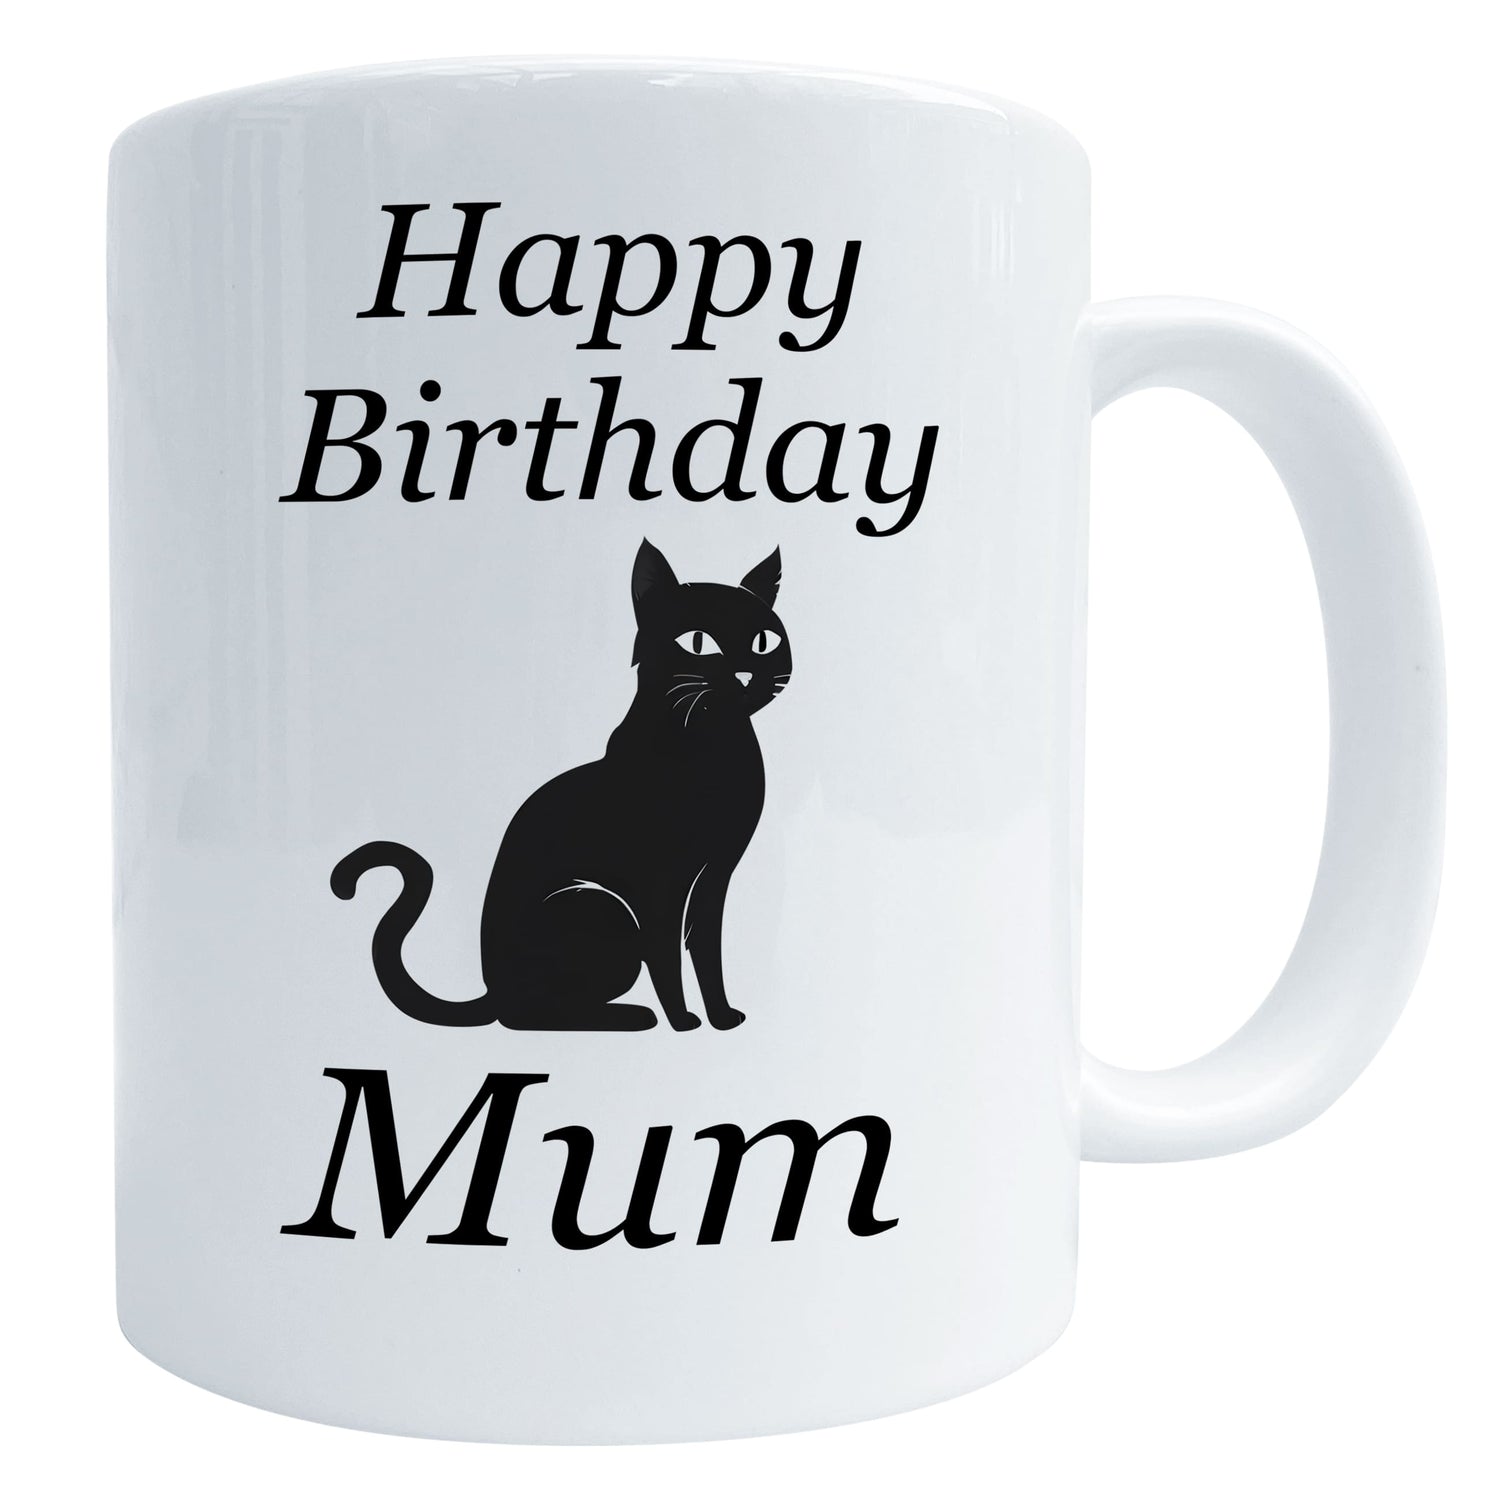 Happy Birthday Black Cat Mug Mum Mug